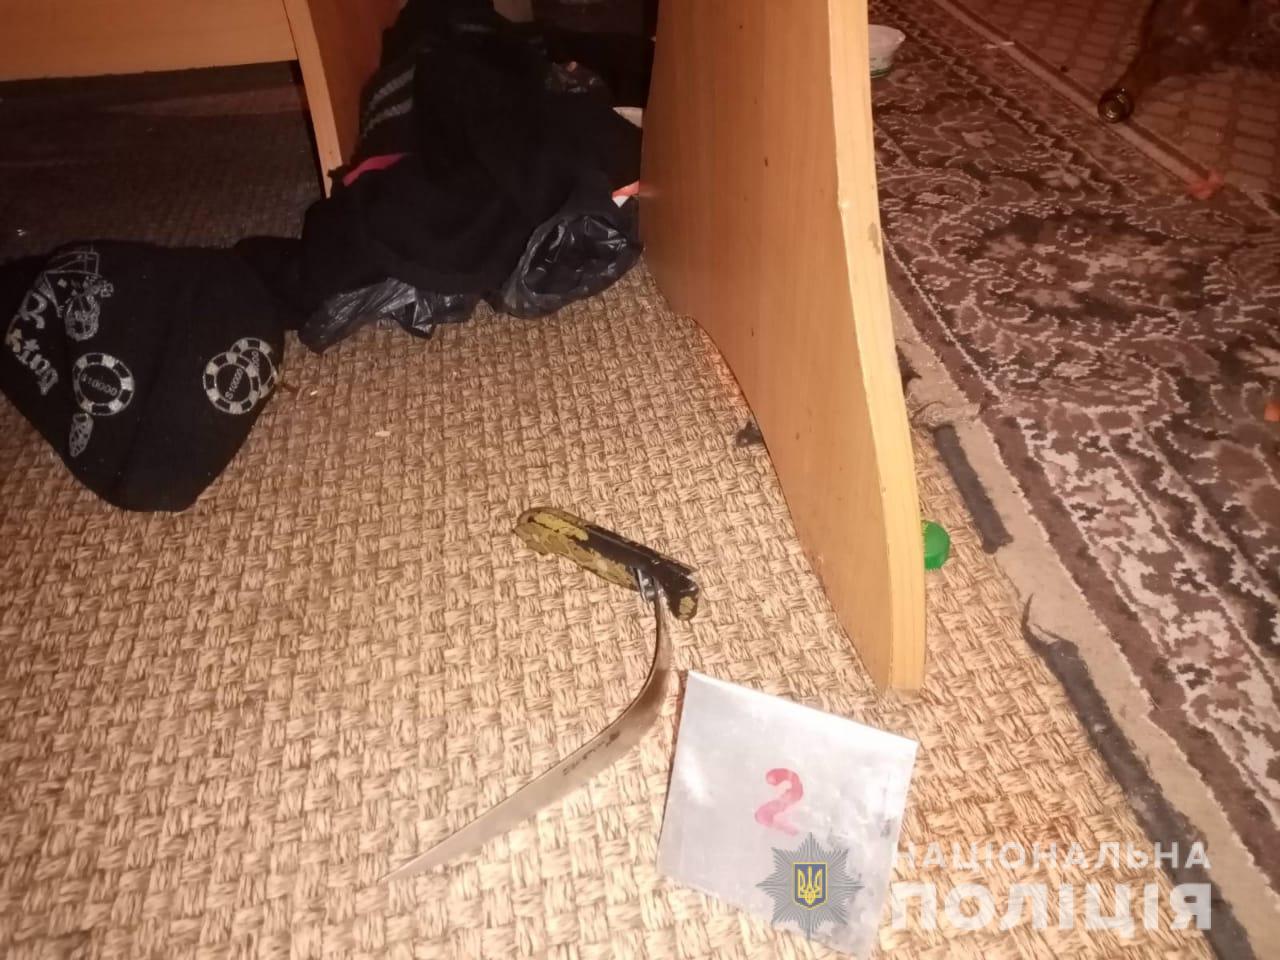 Под Харьковом хозяин дома с ножом напал на гостей